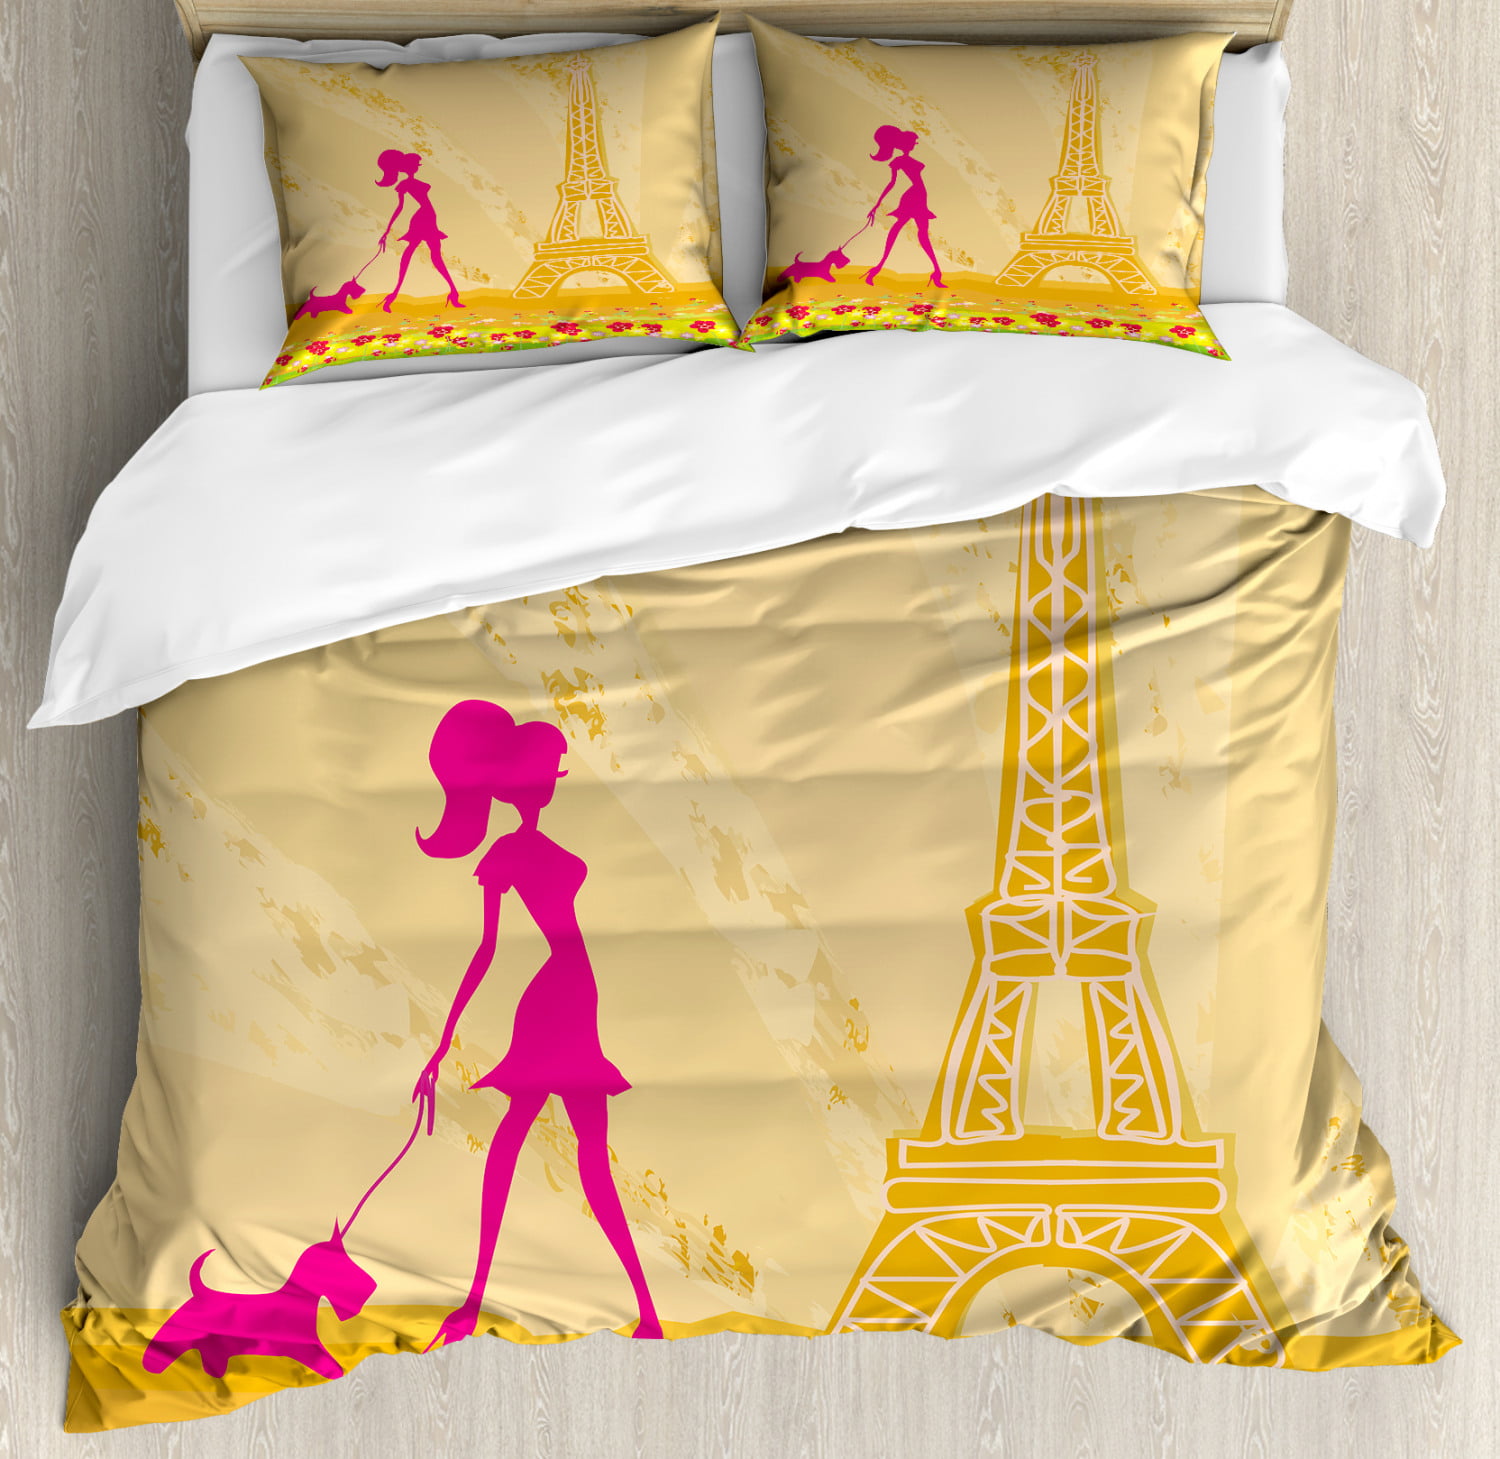 Queen Comforter Set for Women Bedding Pink and Gold Girls Blanket Throw Pillow 